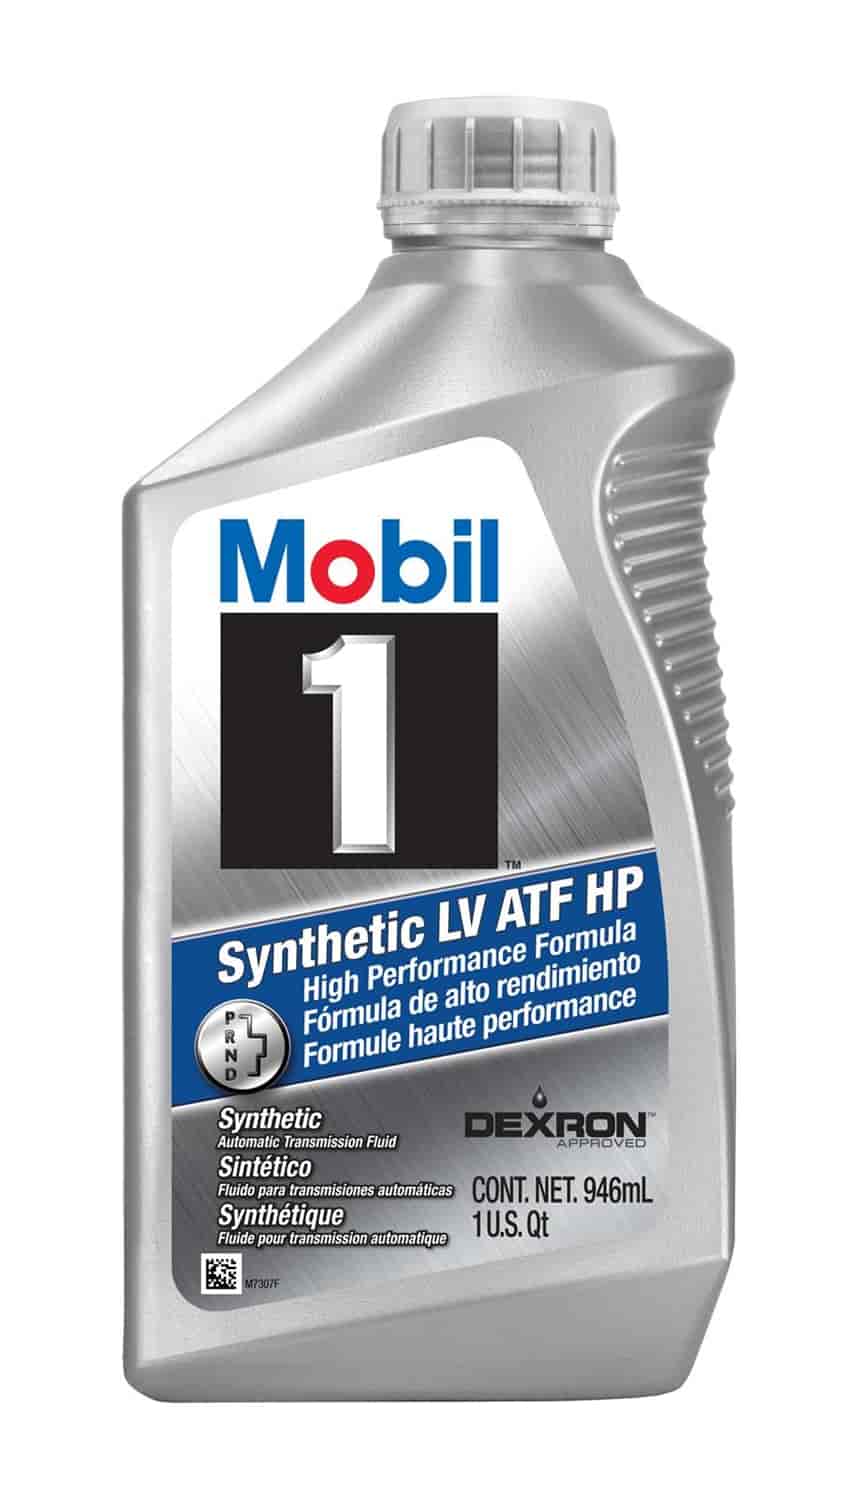 Mobil 1 synthetic LV ATF HP fluid, Transmission & Drivetrain